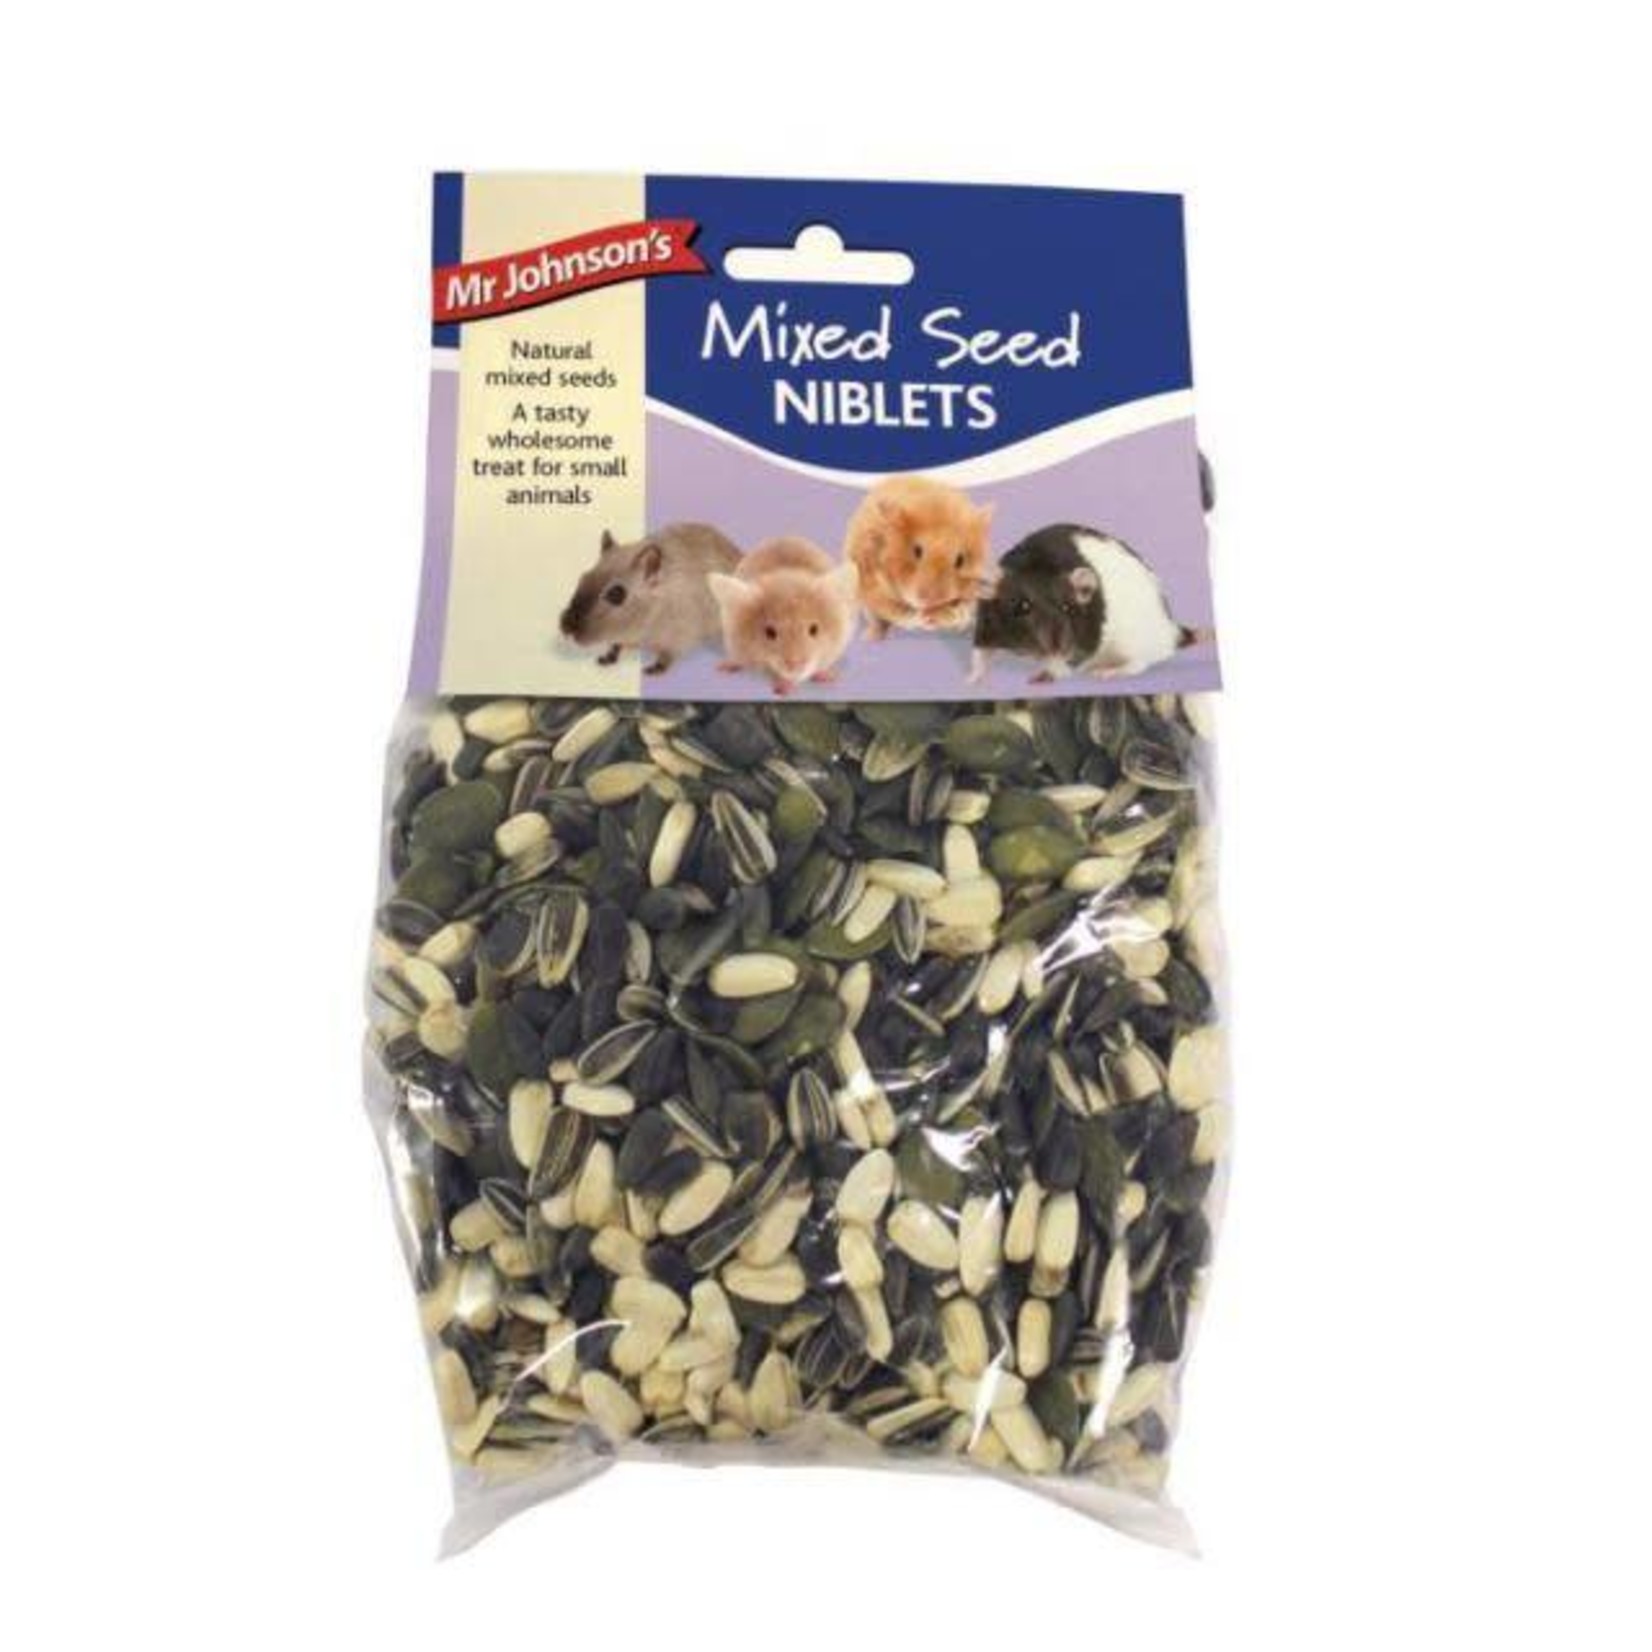 Mr Johnson's Mixed Seed Niblets Small Animal Treats, 160g